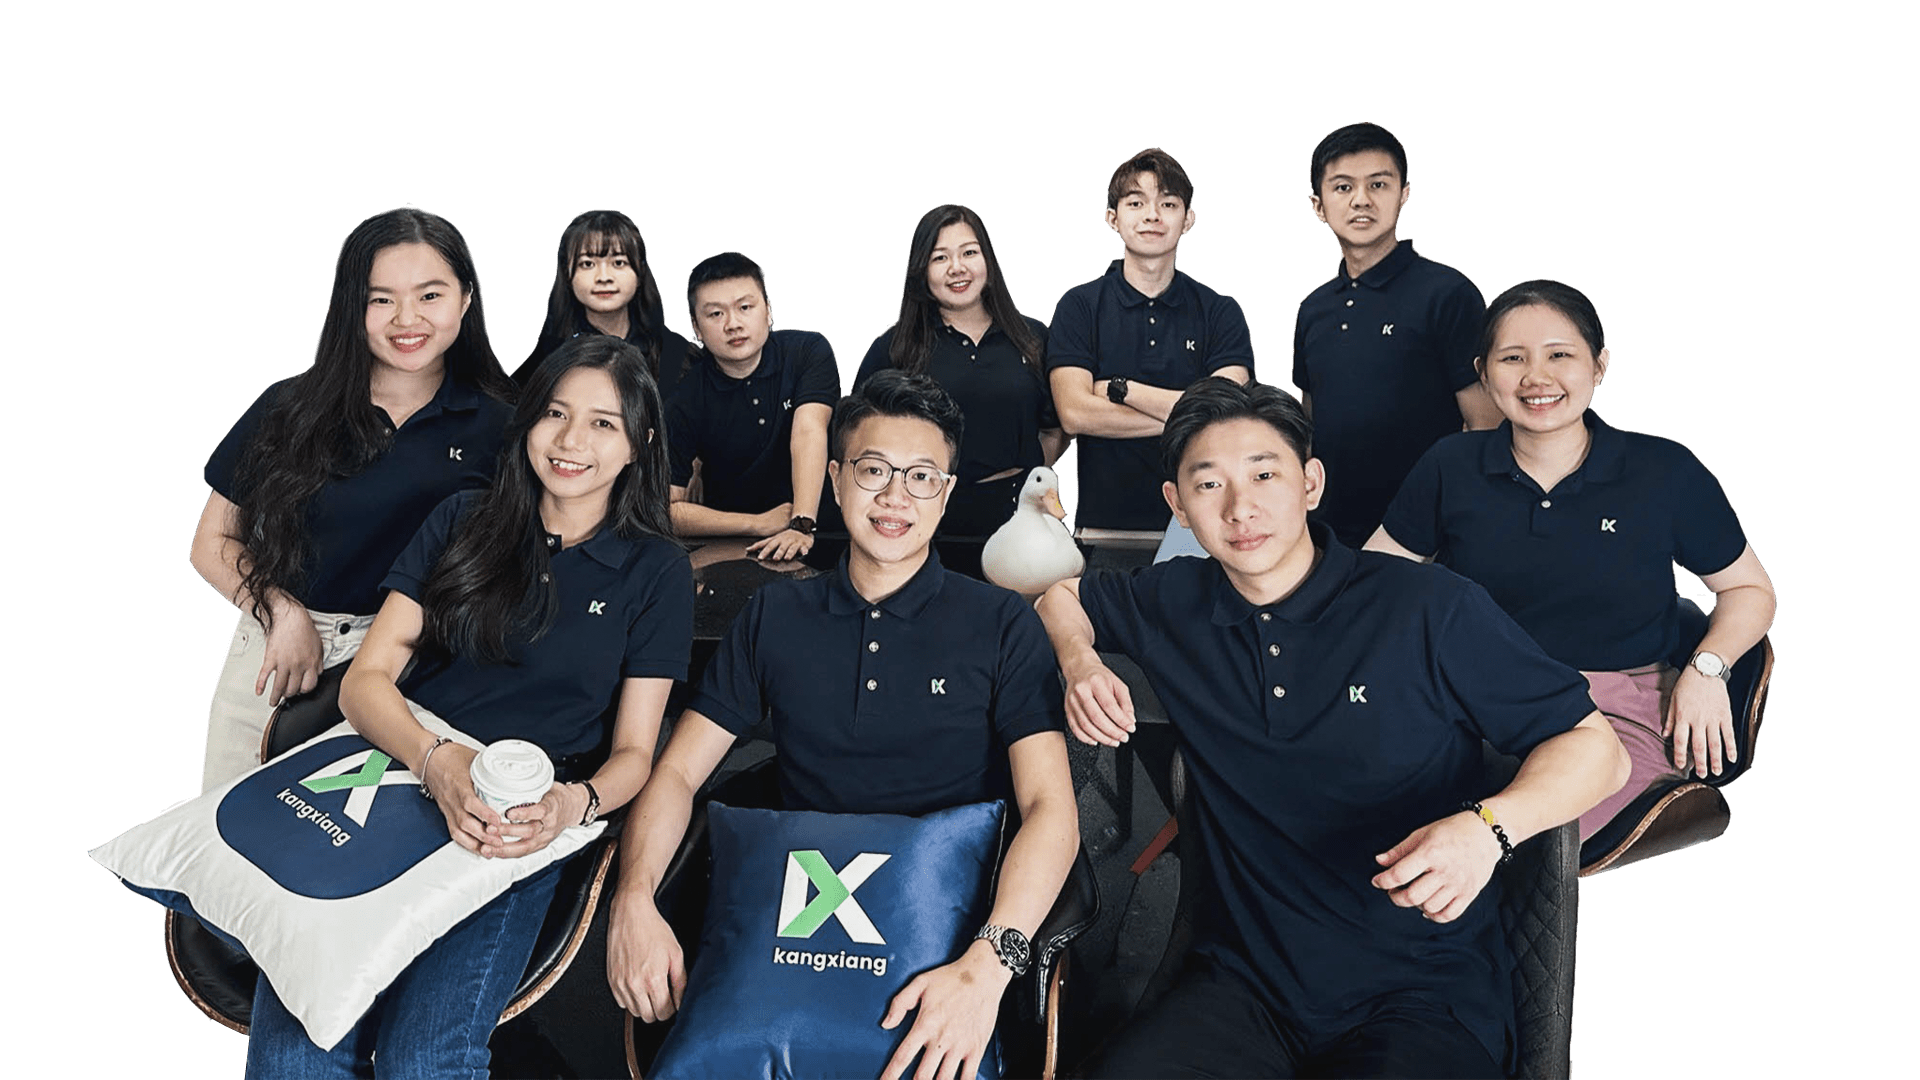 kangxiang branding team malaysia